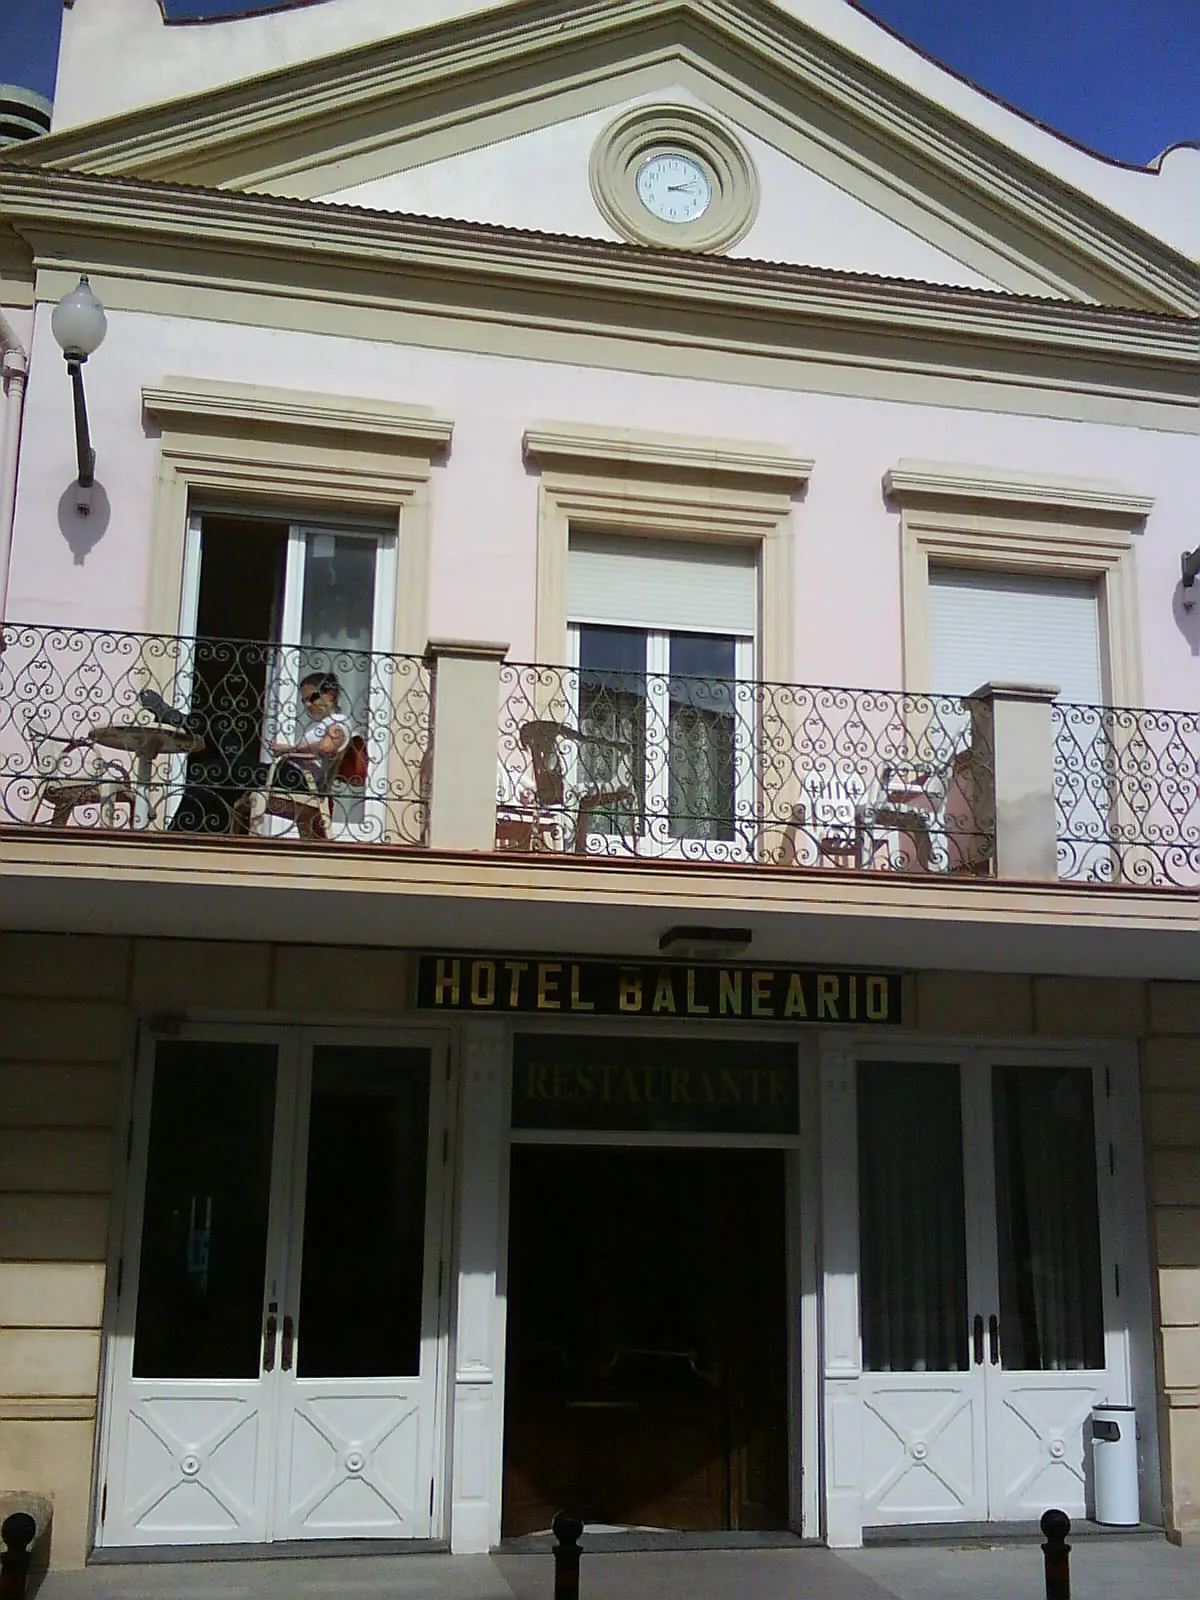 Photo showing: Hotel Balneario in Fortuna, Spain.